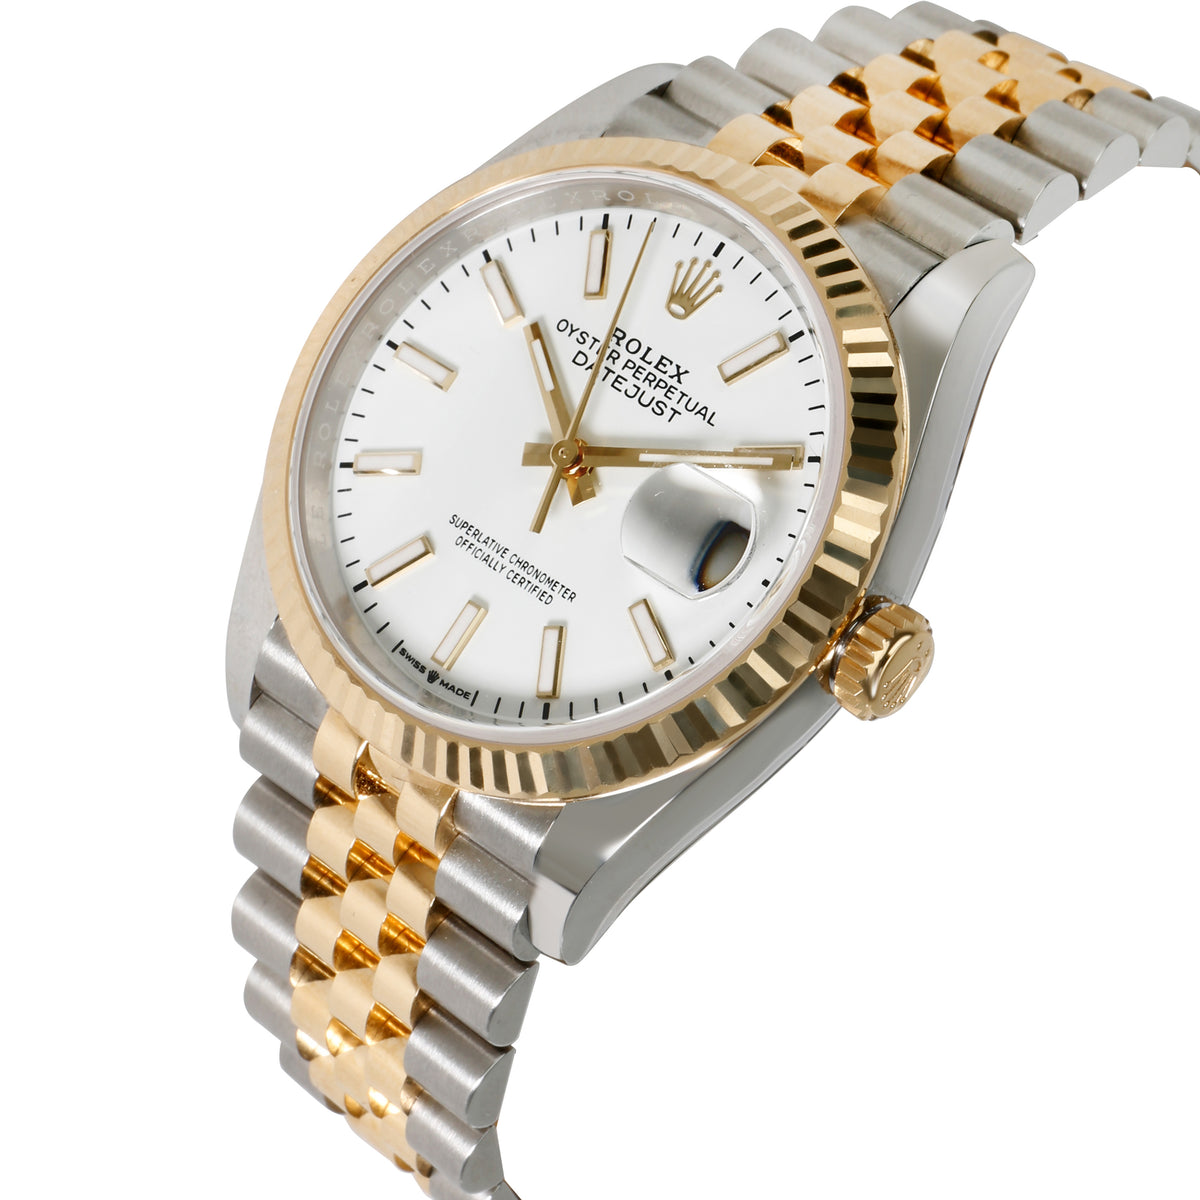 Rolex Datejust 126233 Men's Watch in 18kt Stainless Steel/Yellow Gold